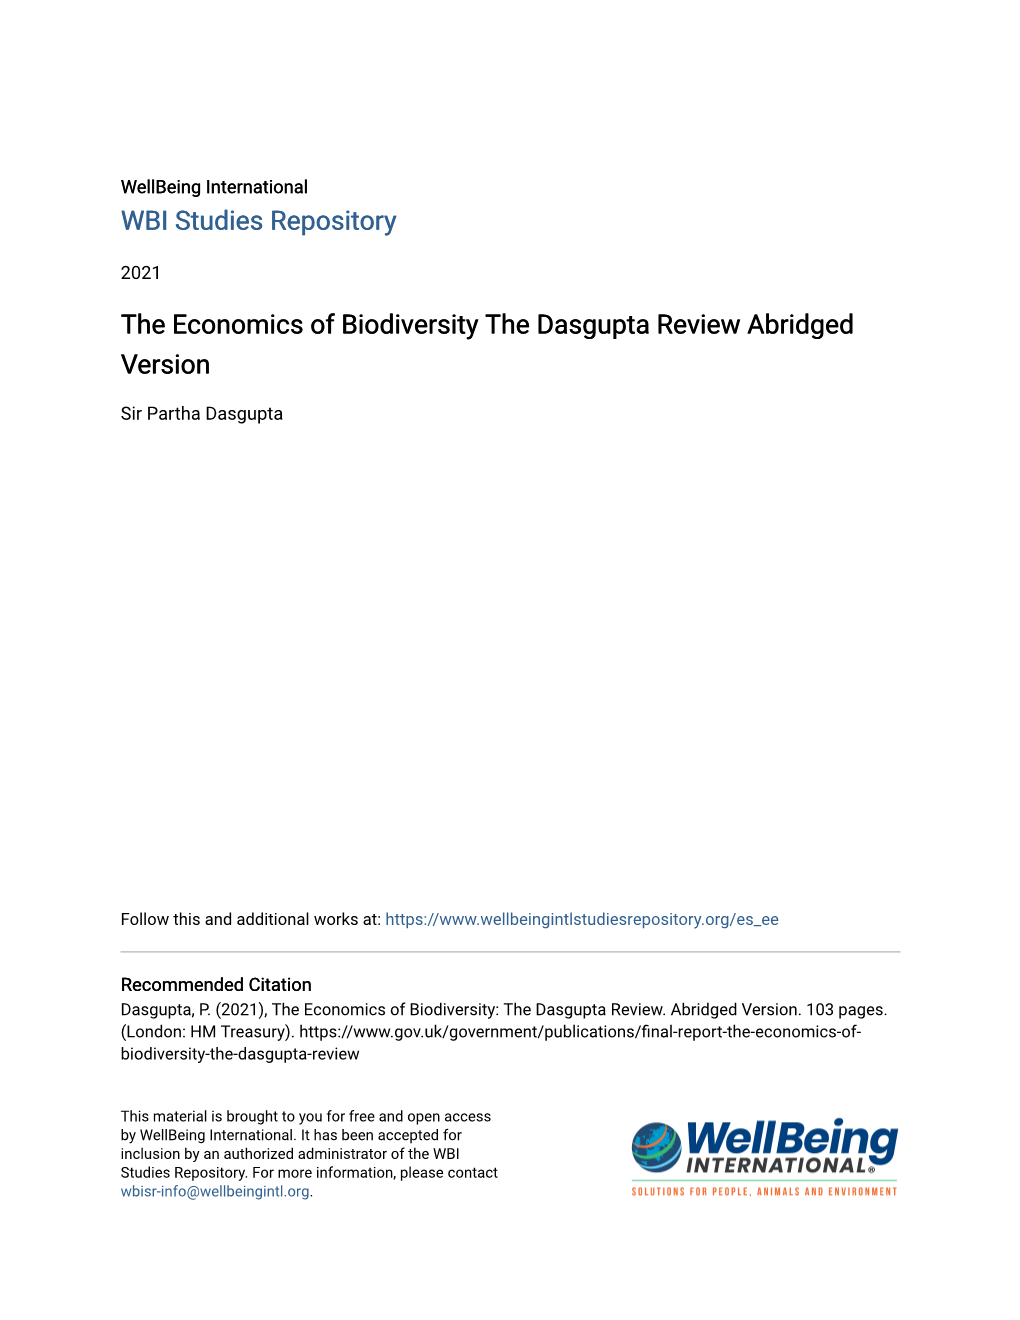 The Economics of Biodiversity the Dasgupta Review Abridged Version